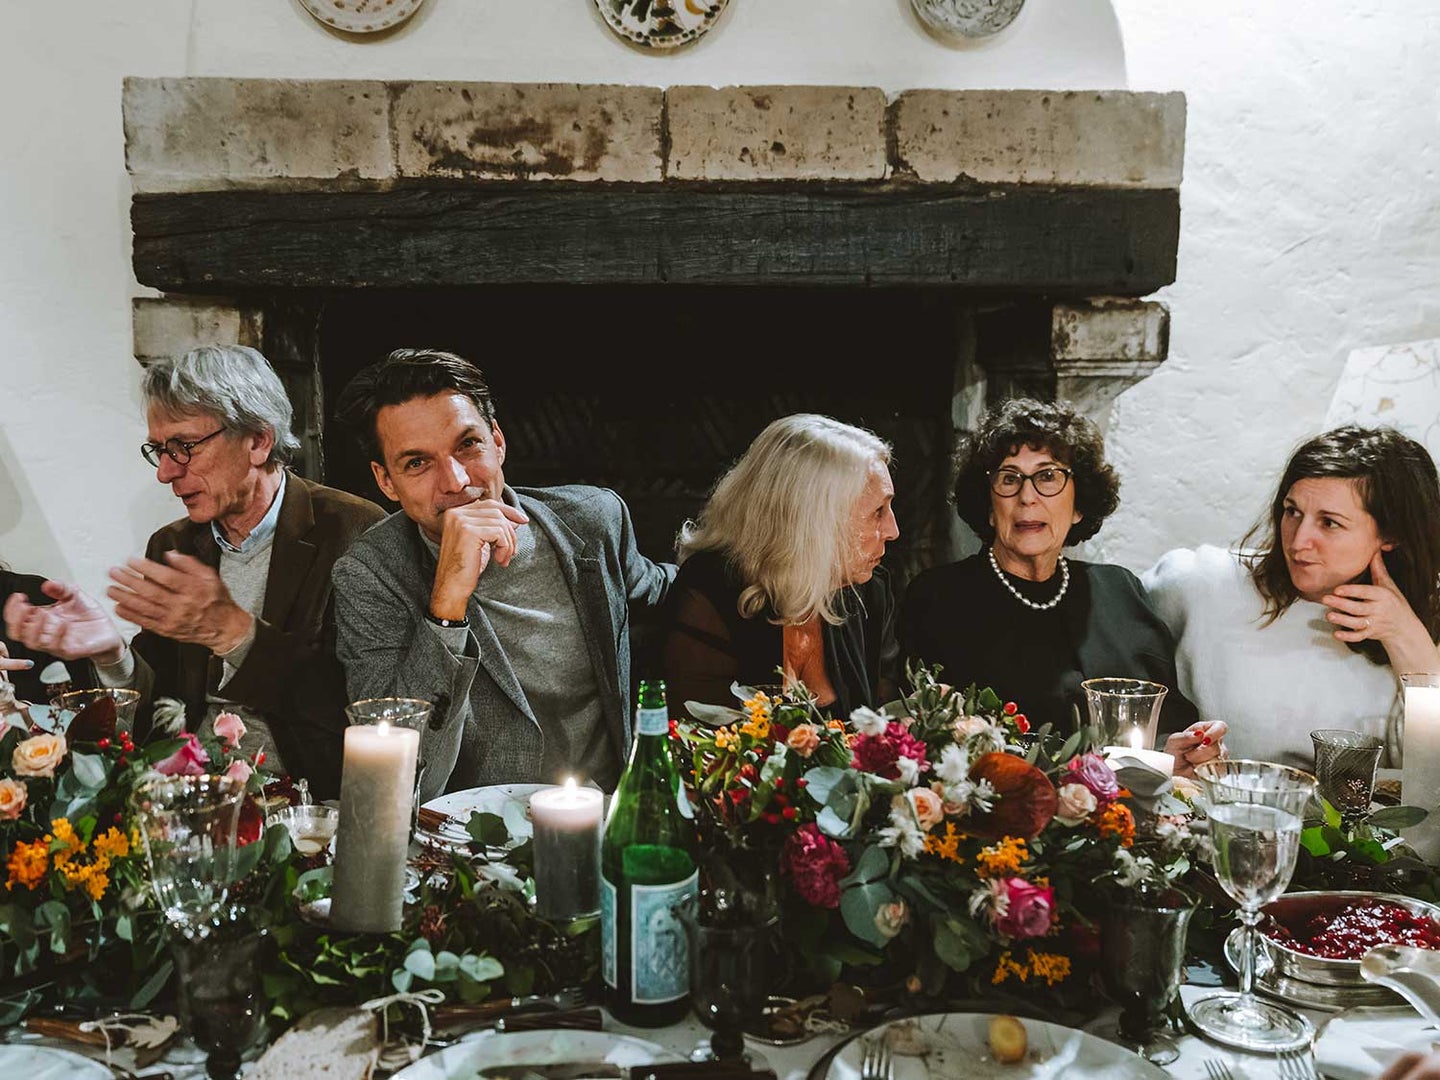 Guests sitting at table at holiday meal.